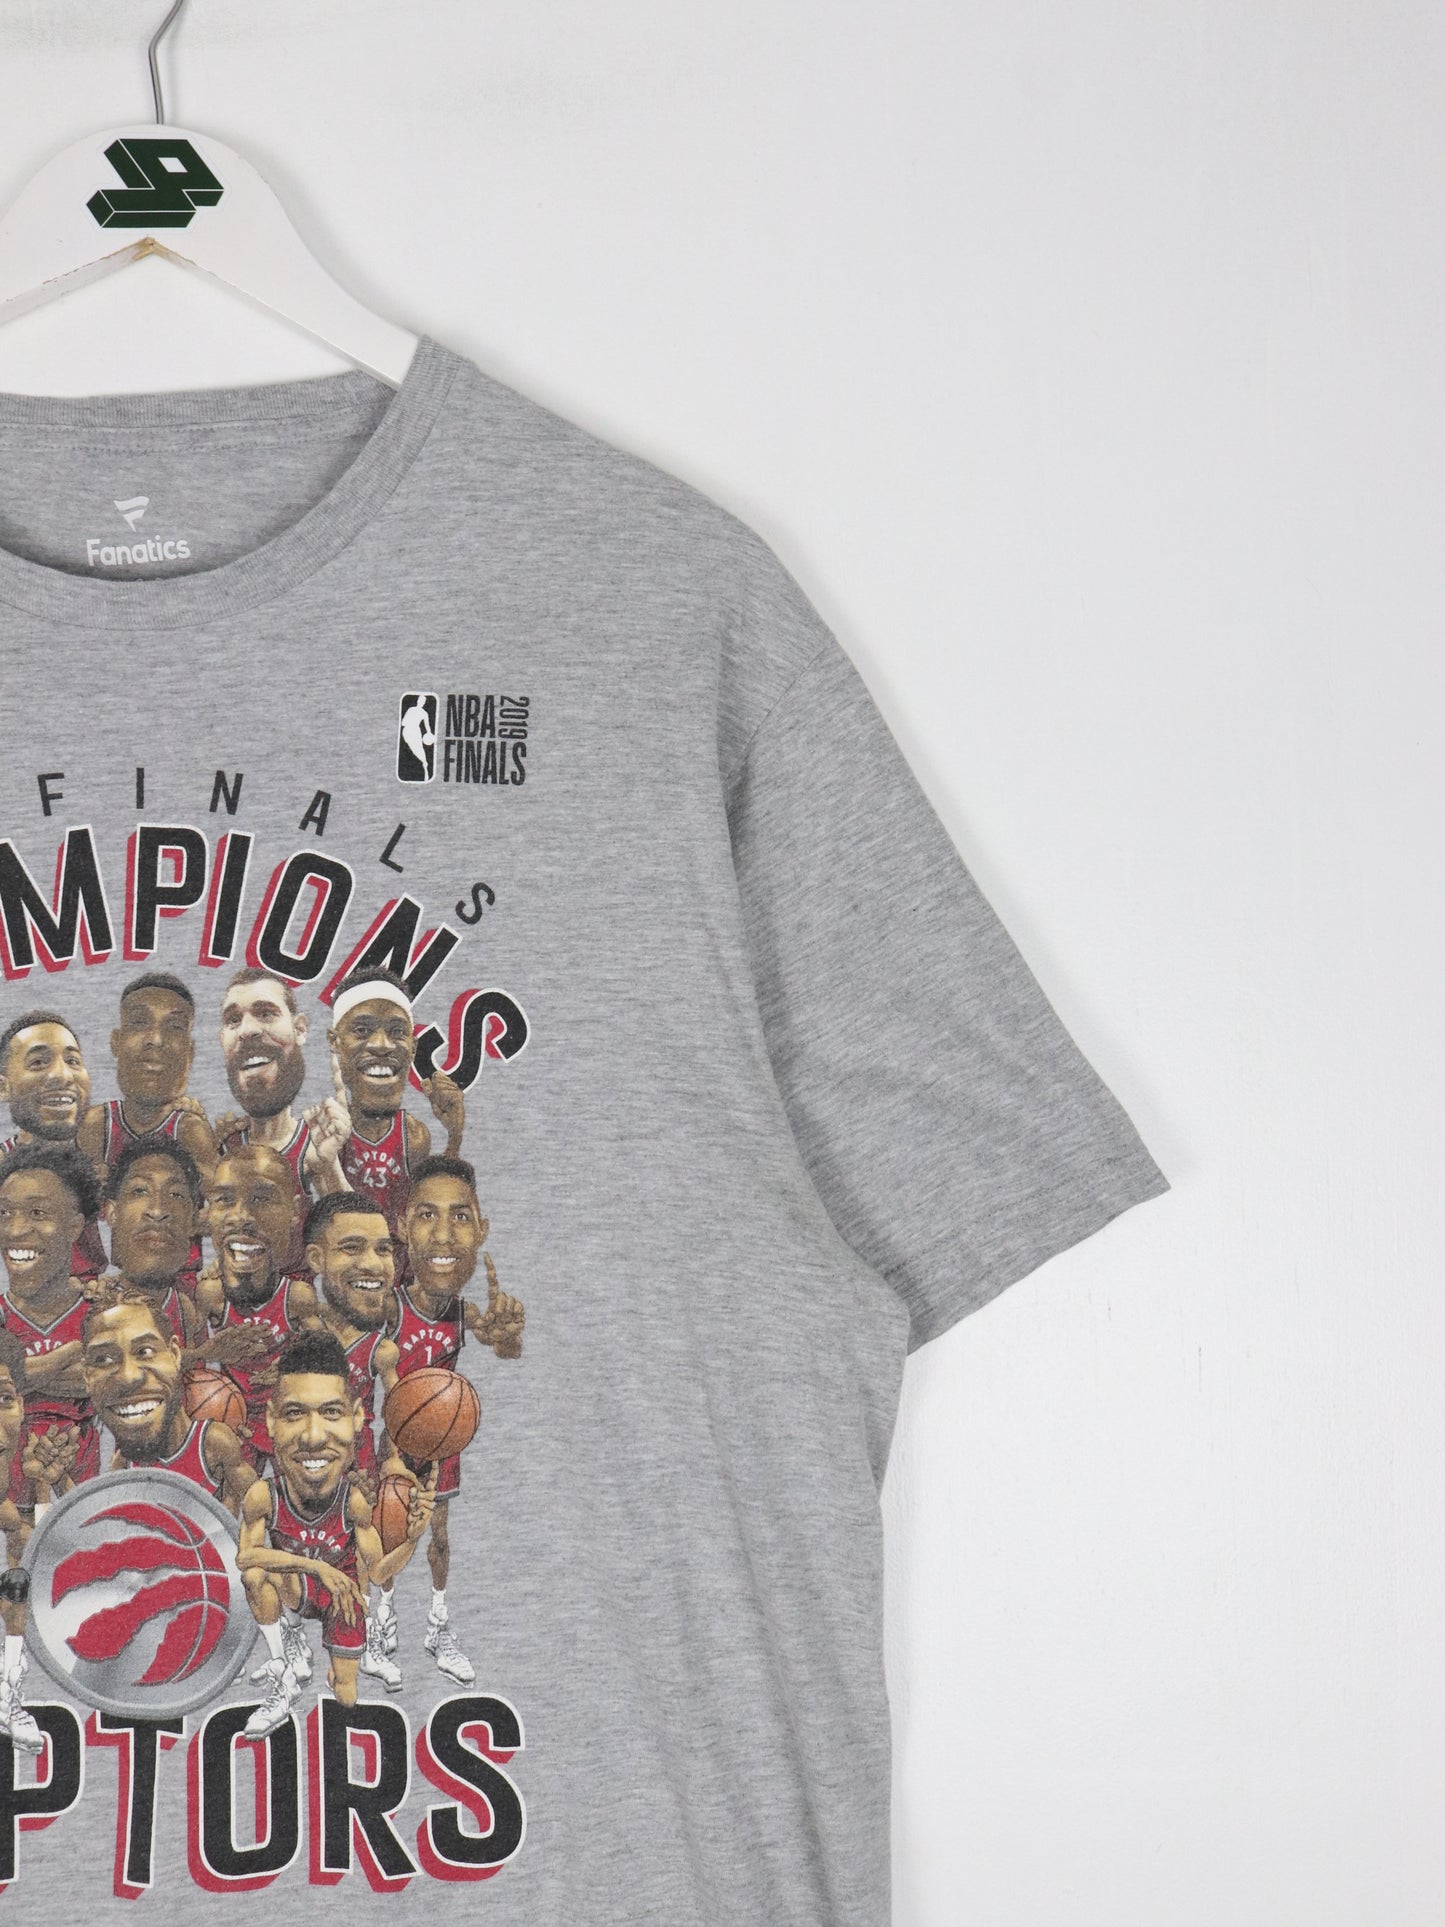 Toronto Raptors T Shirt Mens Large Grey NBA Champions Fanatics Caricatures